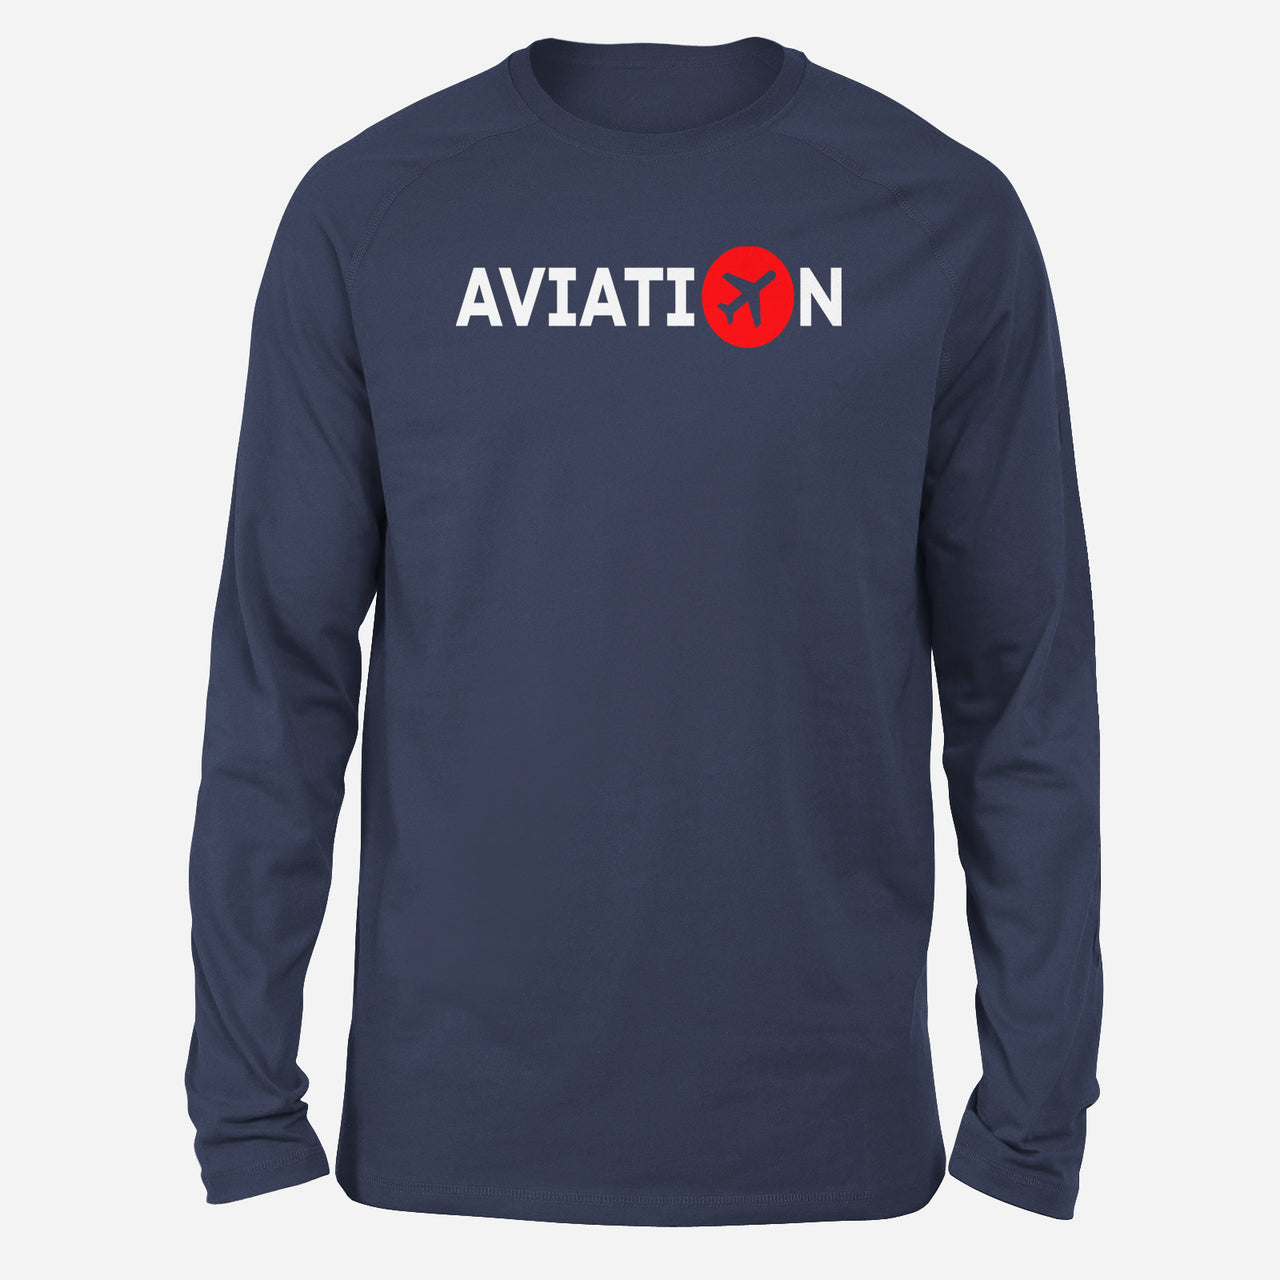 Aviation Designed Long-Sleeve T-Shirts